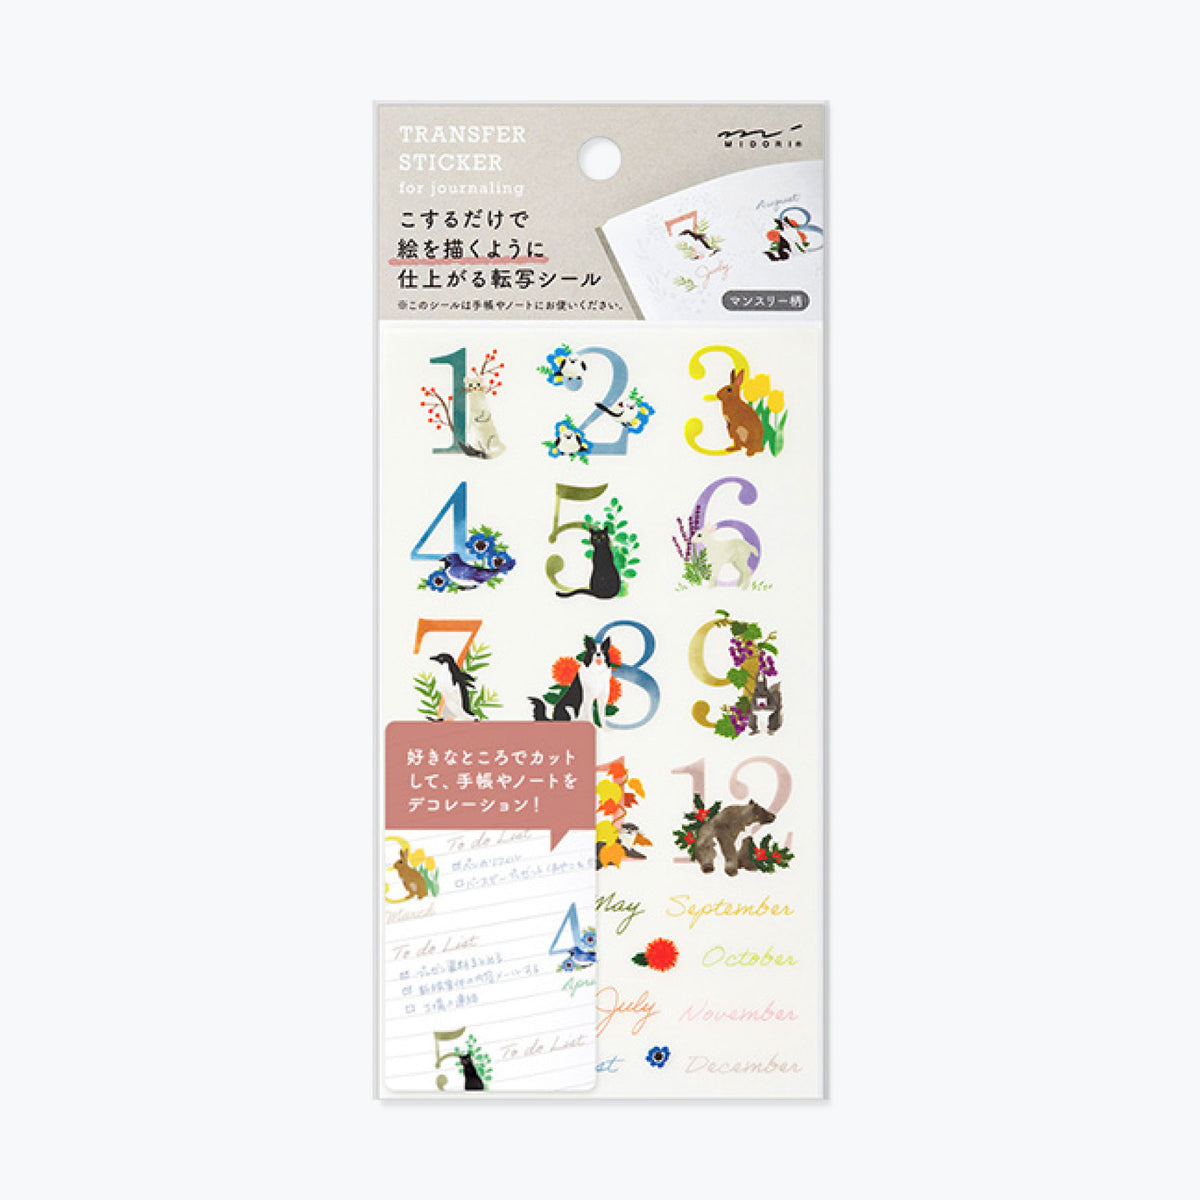 Midori - Sticker Seal - Transfer - Month